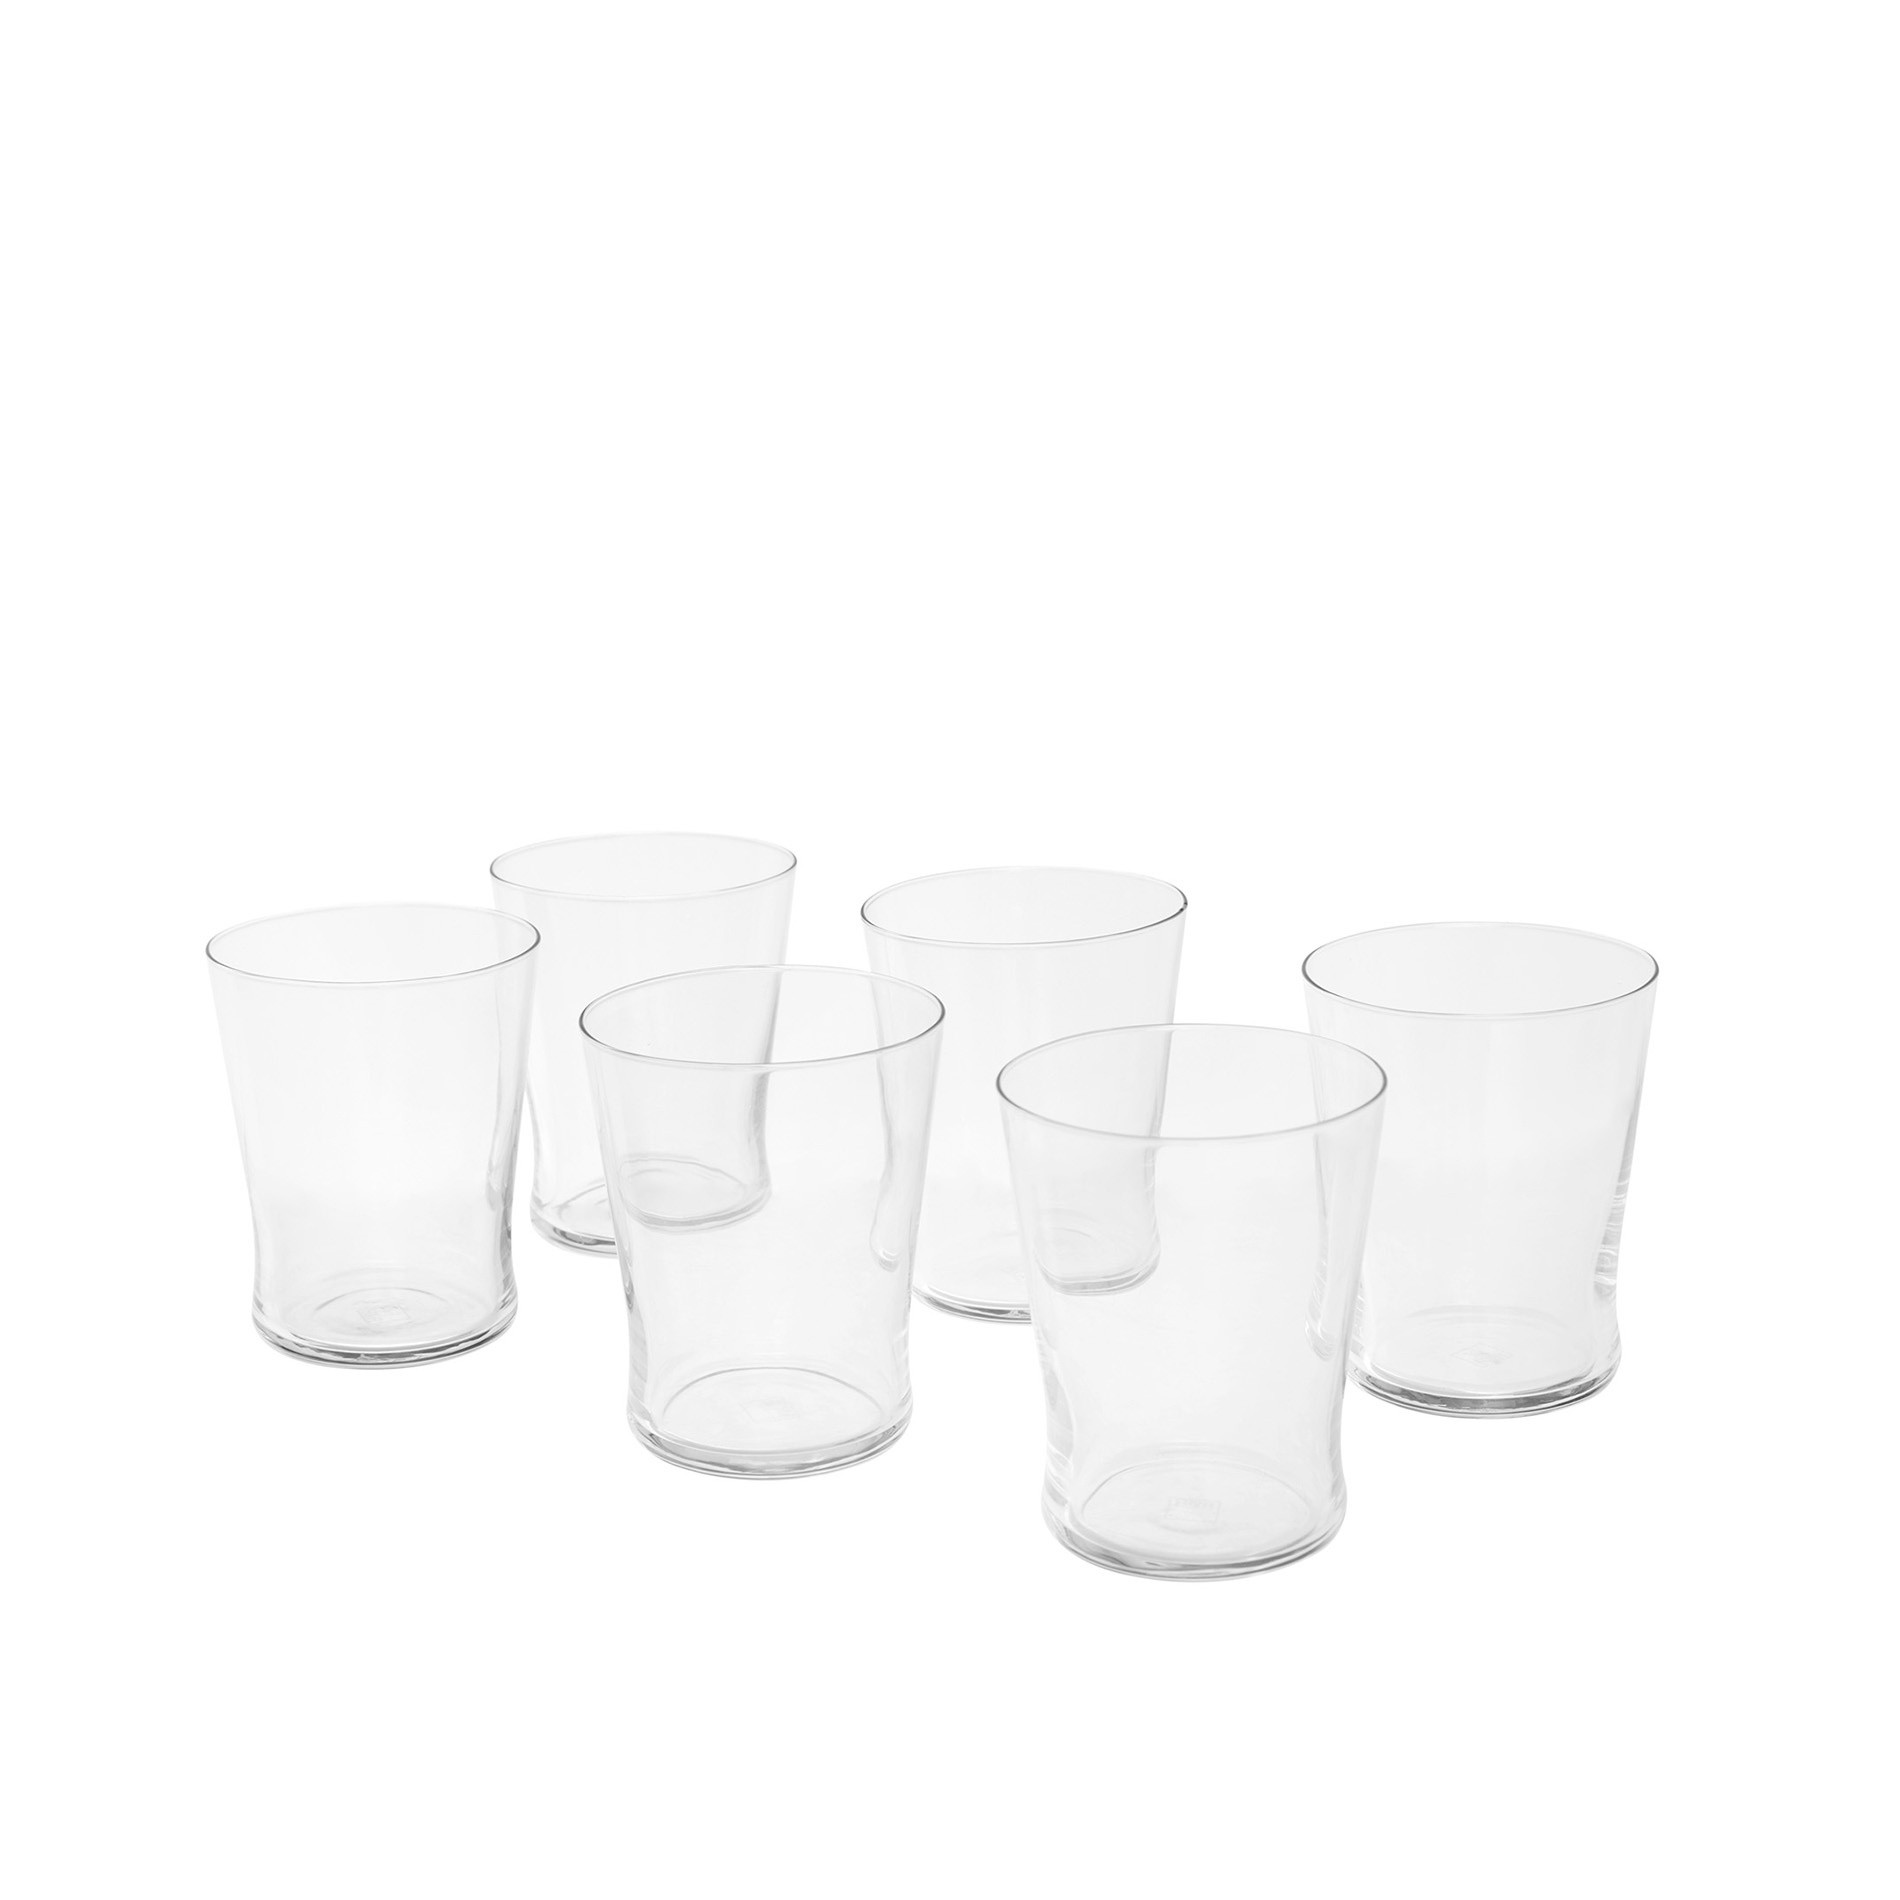 Set of 6 Conic wine glasses, Transparent, large image number 0